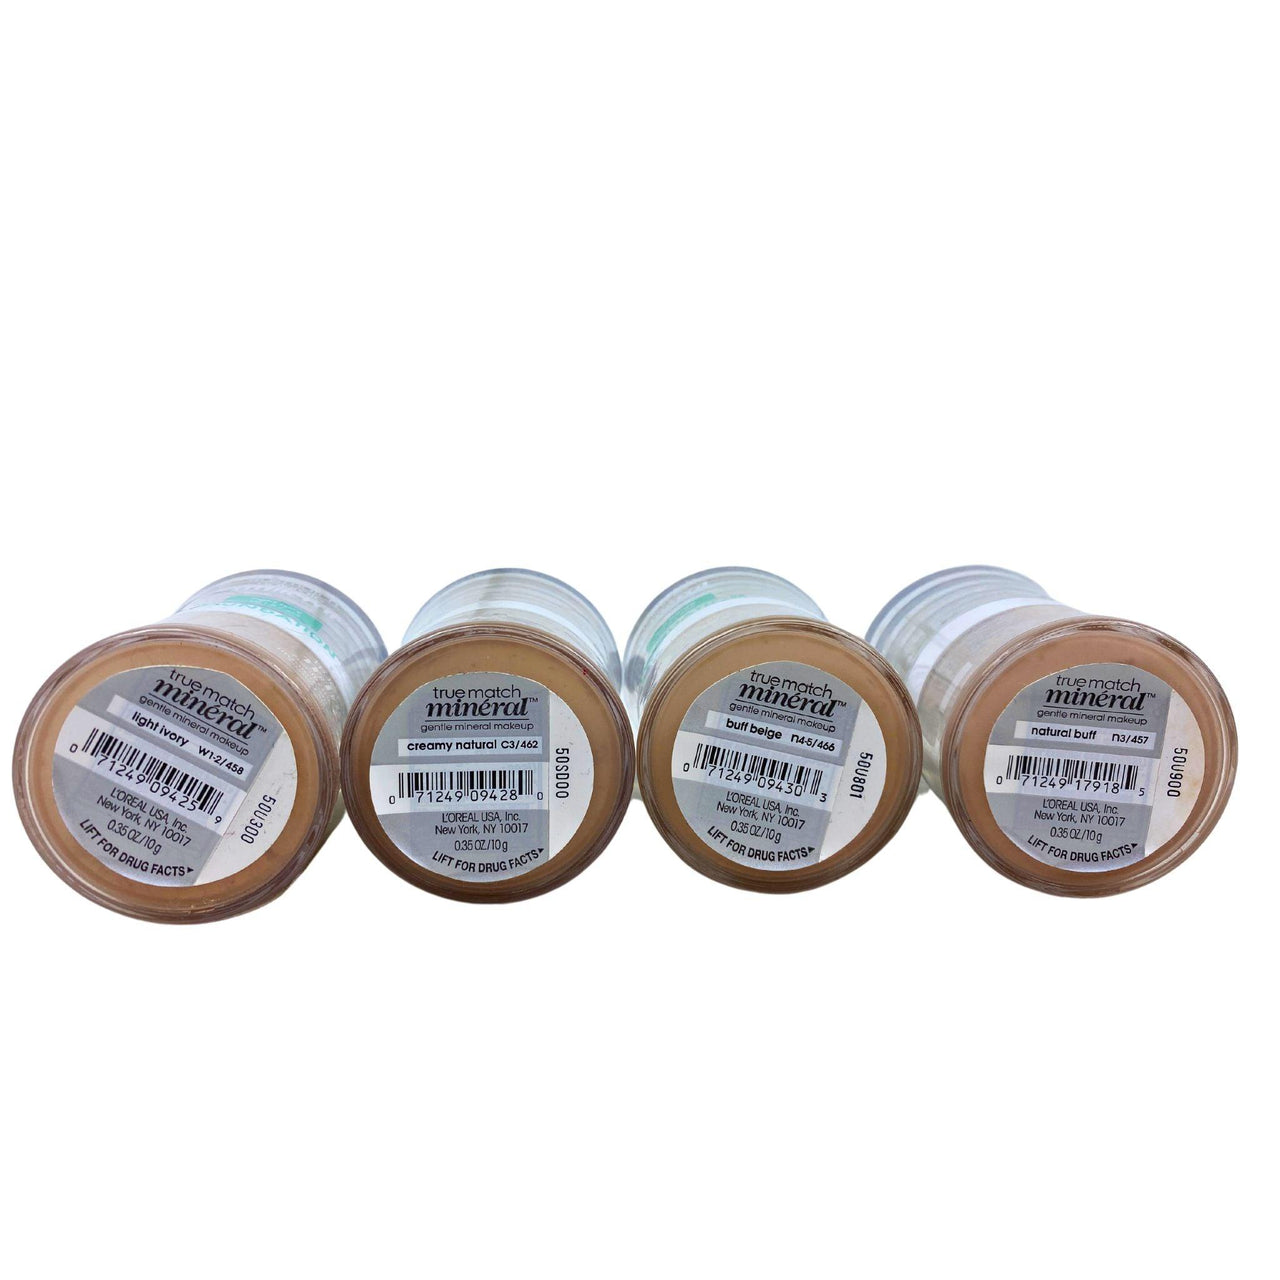 L'Oreal Truematch Mineral Gentle Mineral Makeup Titanium Dioxide Sunscreen Broad Spectrum SPF 19 0.35OZ Assorted Mix (50 Pcs Lot) - Discount Wholesalers Inc